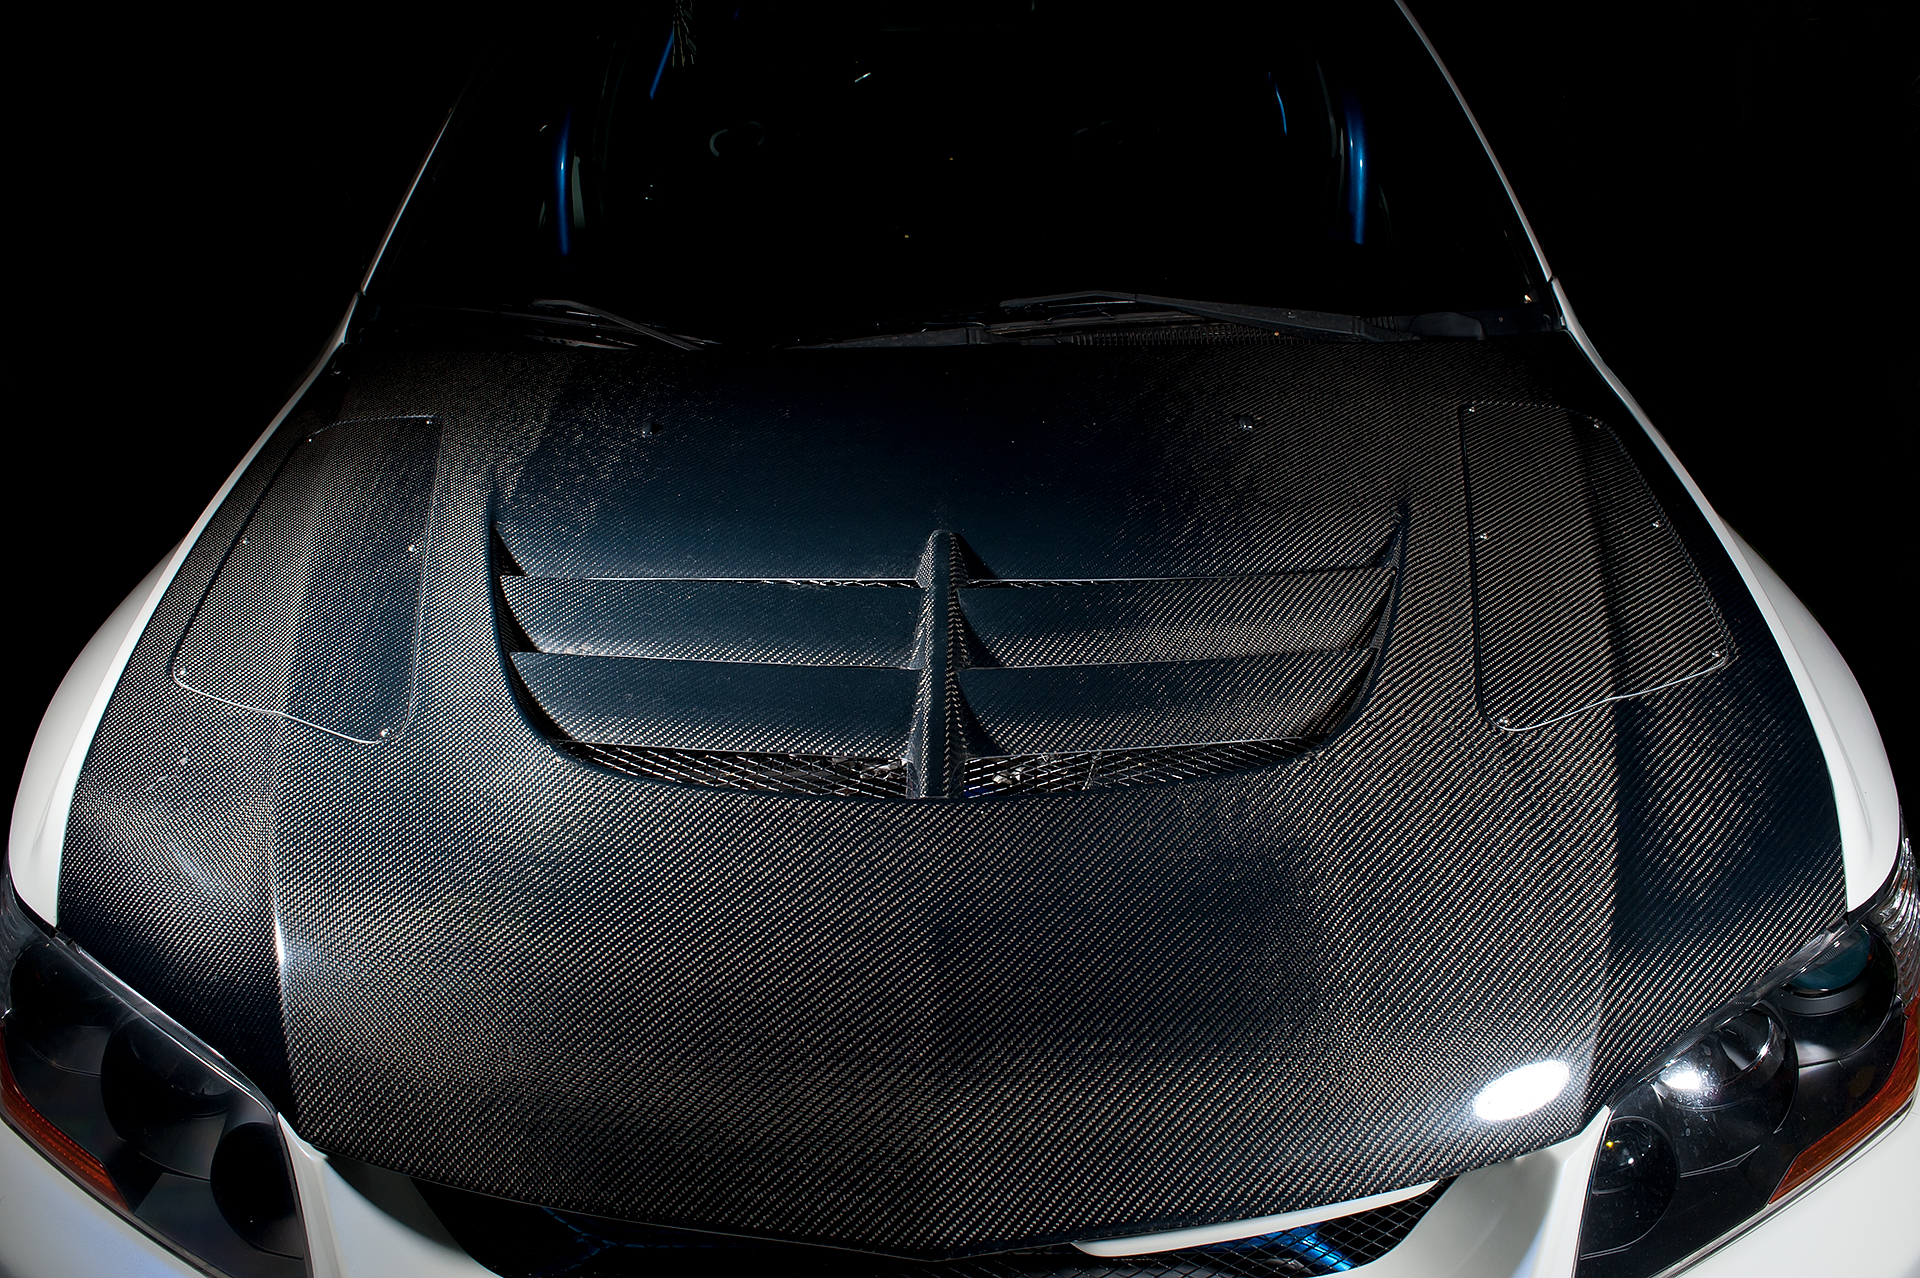 Carbon fiber hood shot of White Mitsubishi Evo IX with Varis body kit